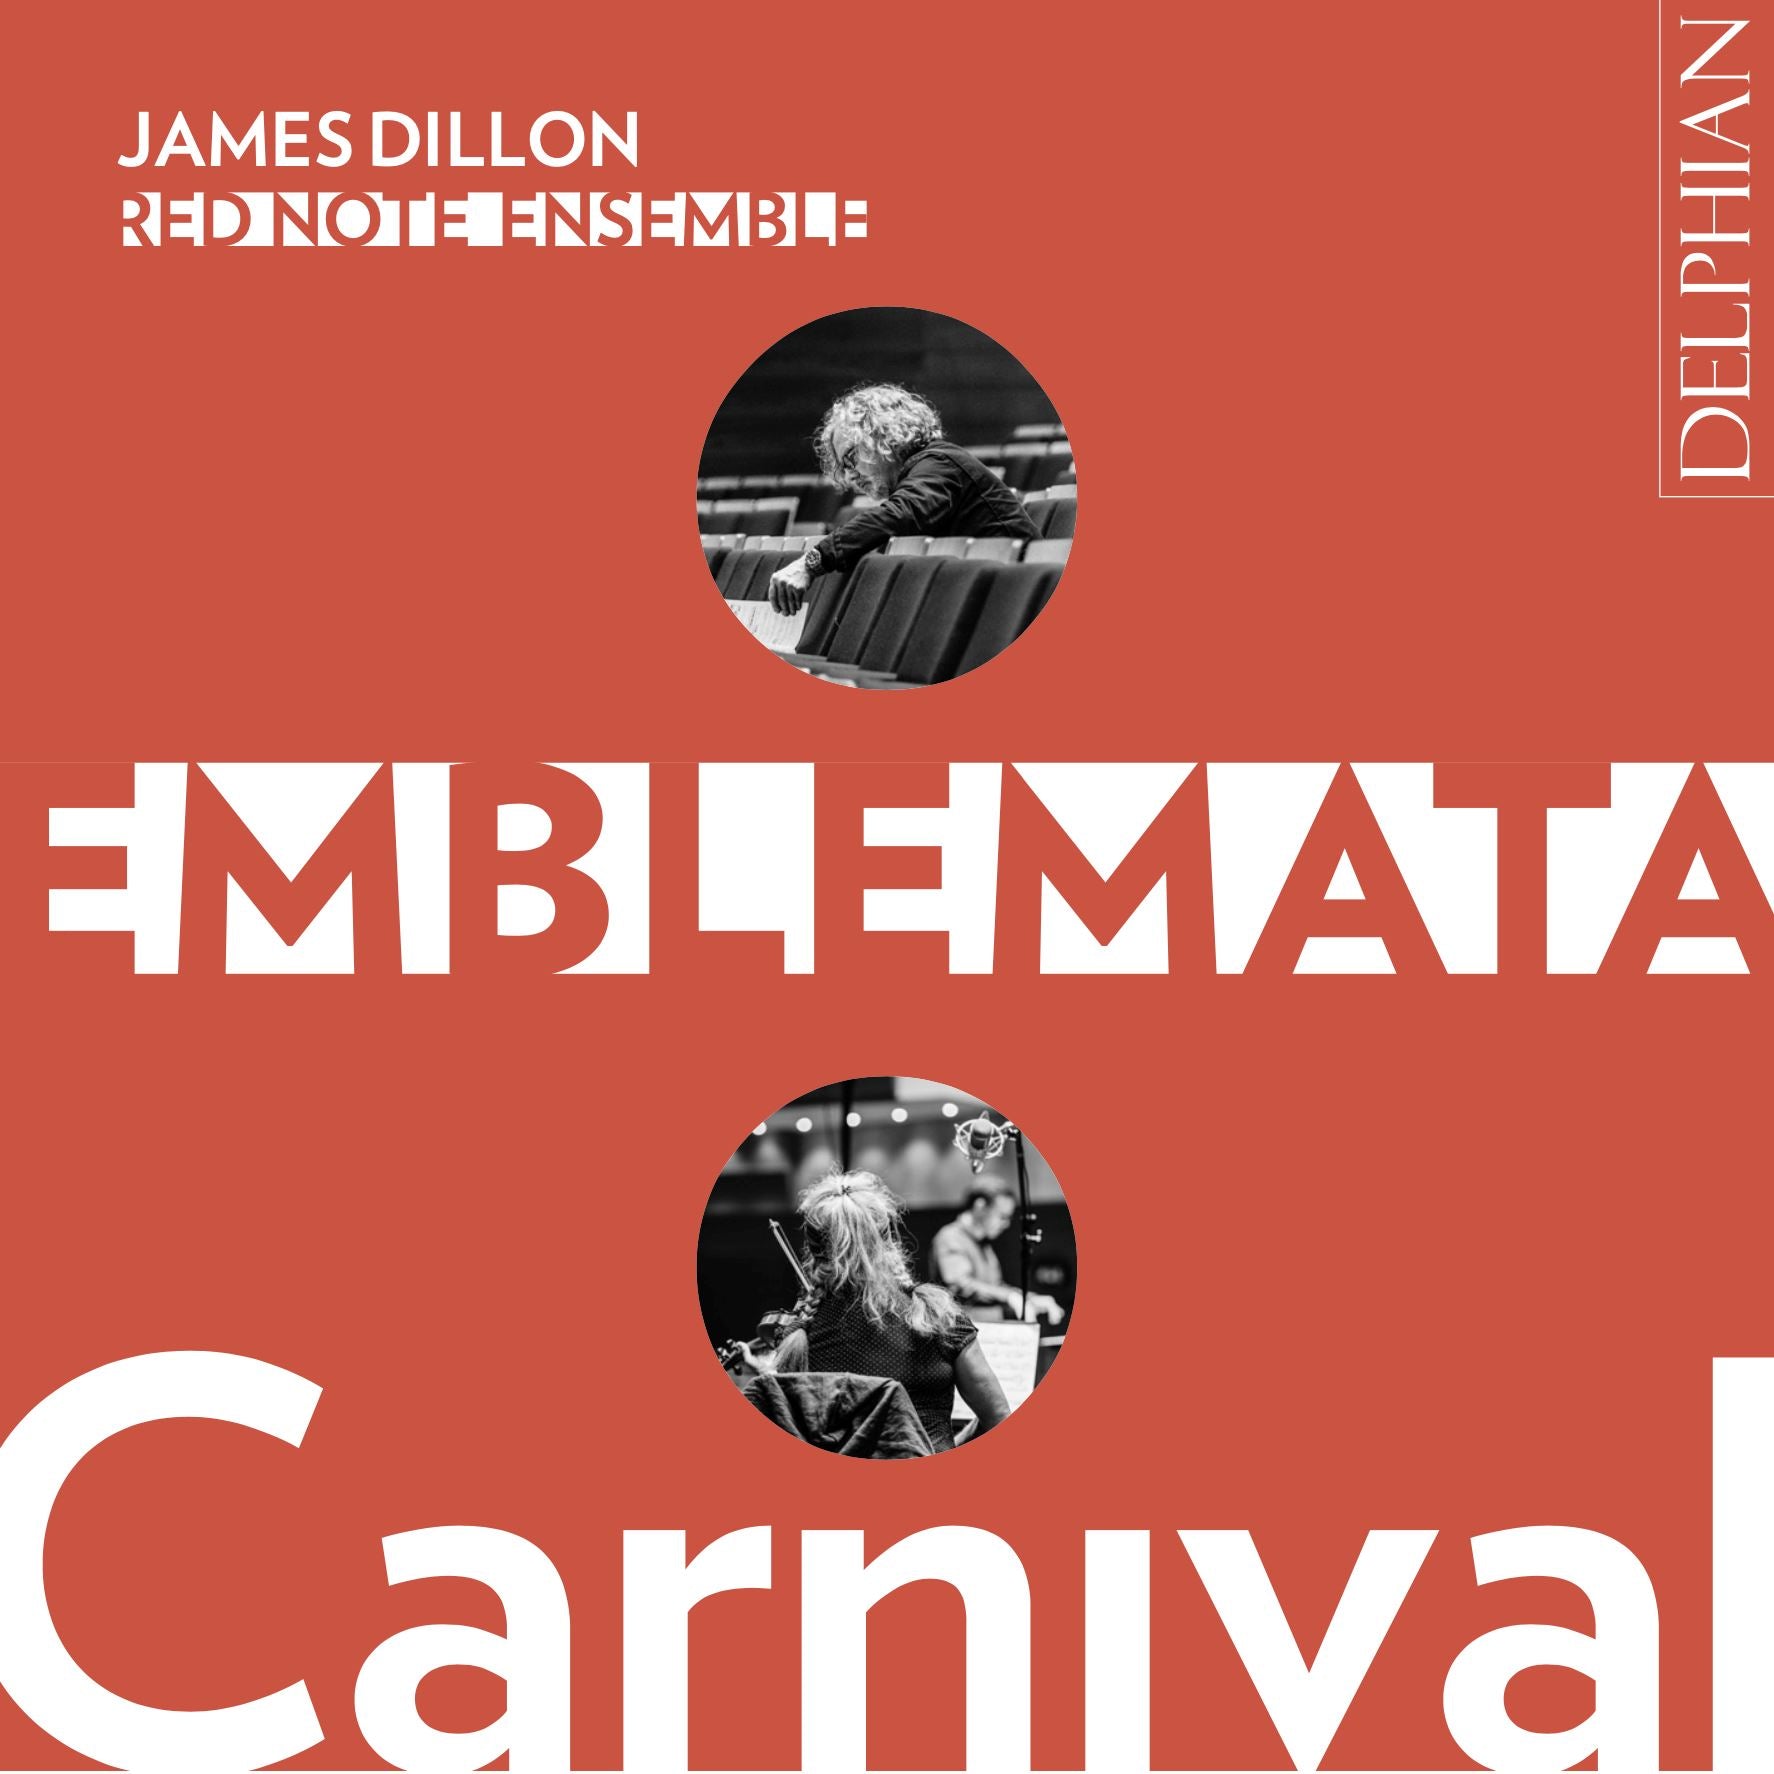 James Dillon: Emblemata - Carnival CD Delphian Records